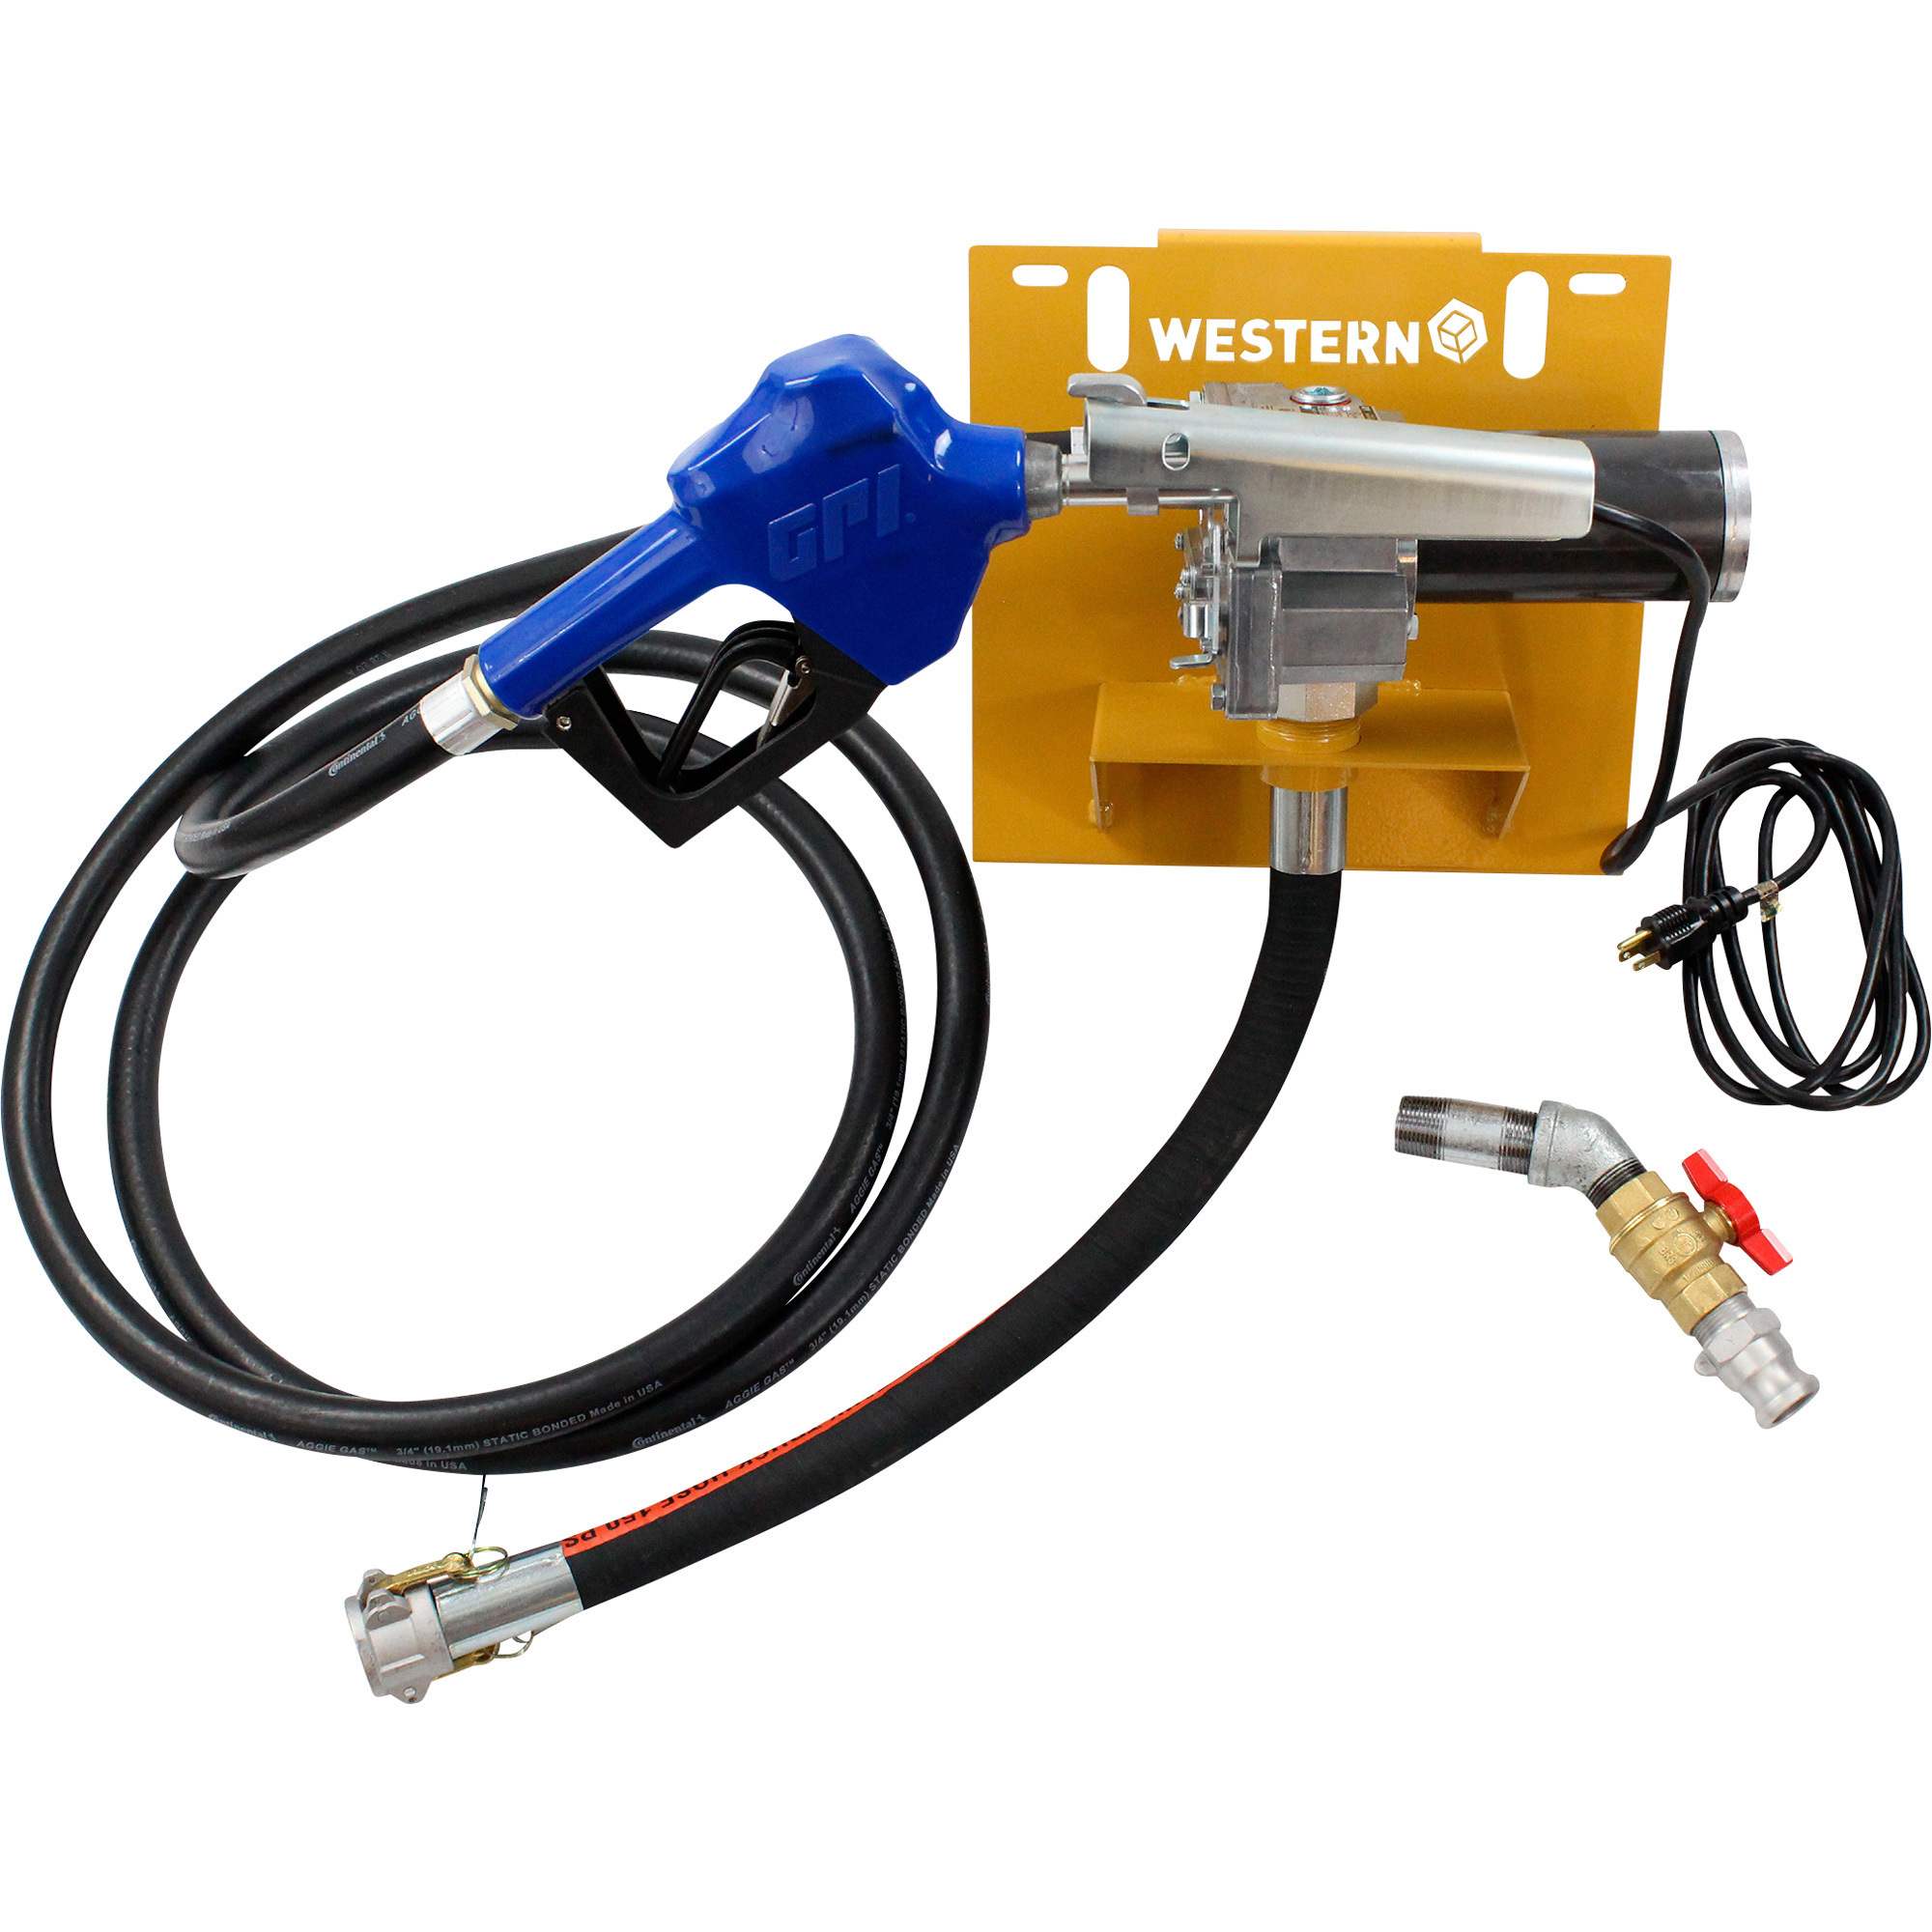 Western Global 110 Volt, 12 GPM Pump Kit, Model M1115SAUK